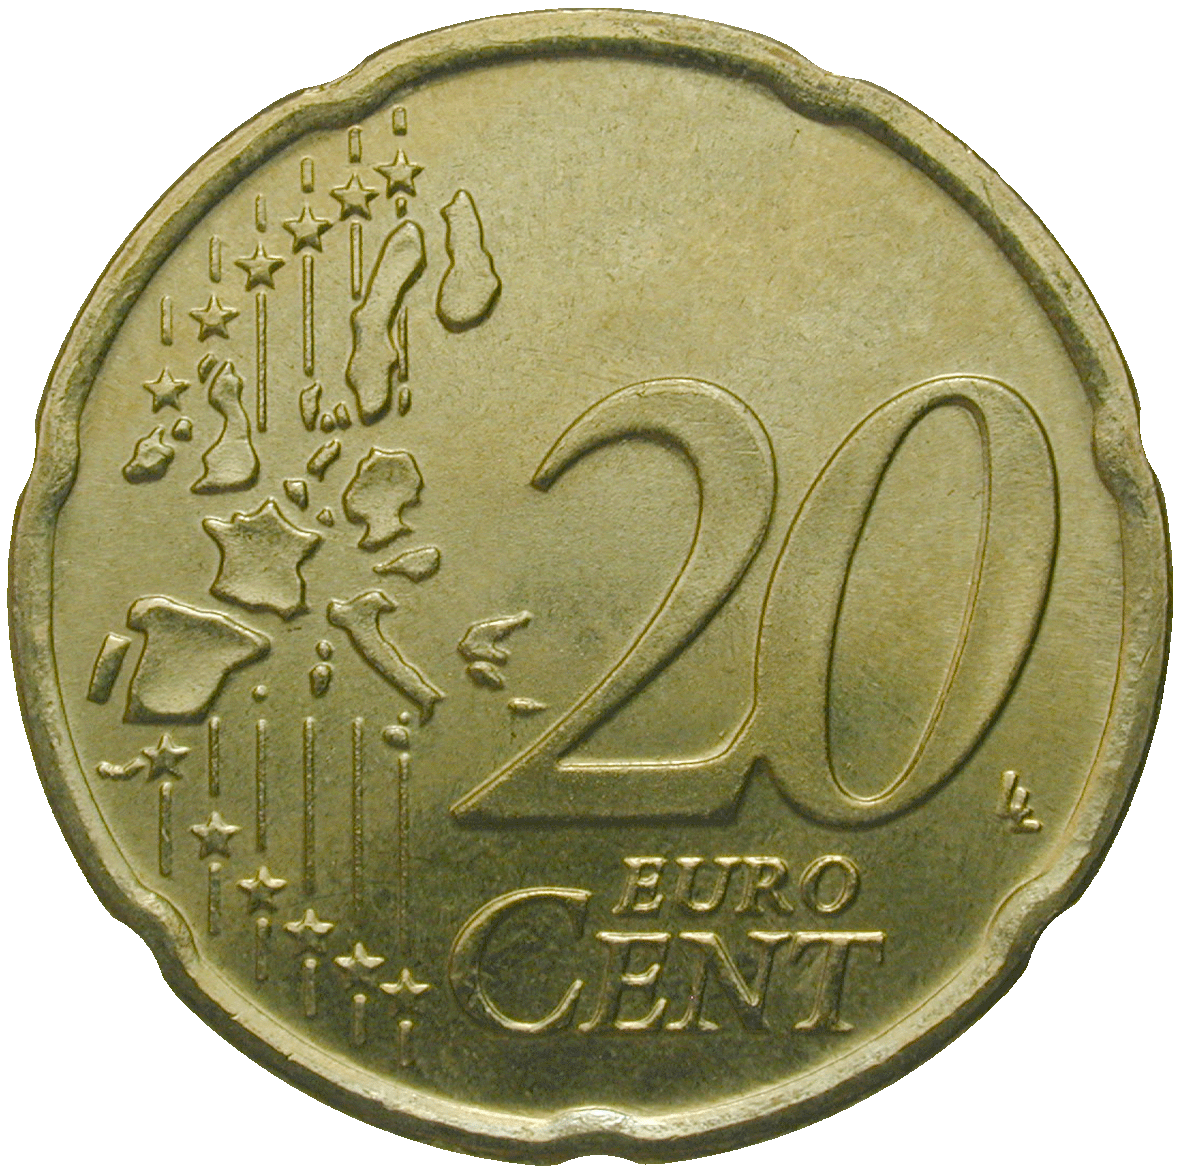 Republic of Greece, 20 Euro Cent 2002 (reverse)